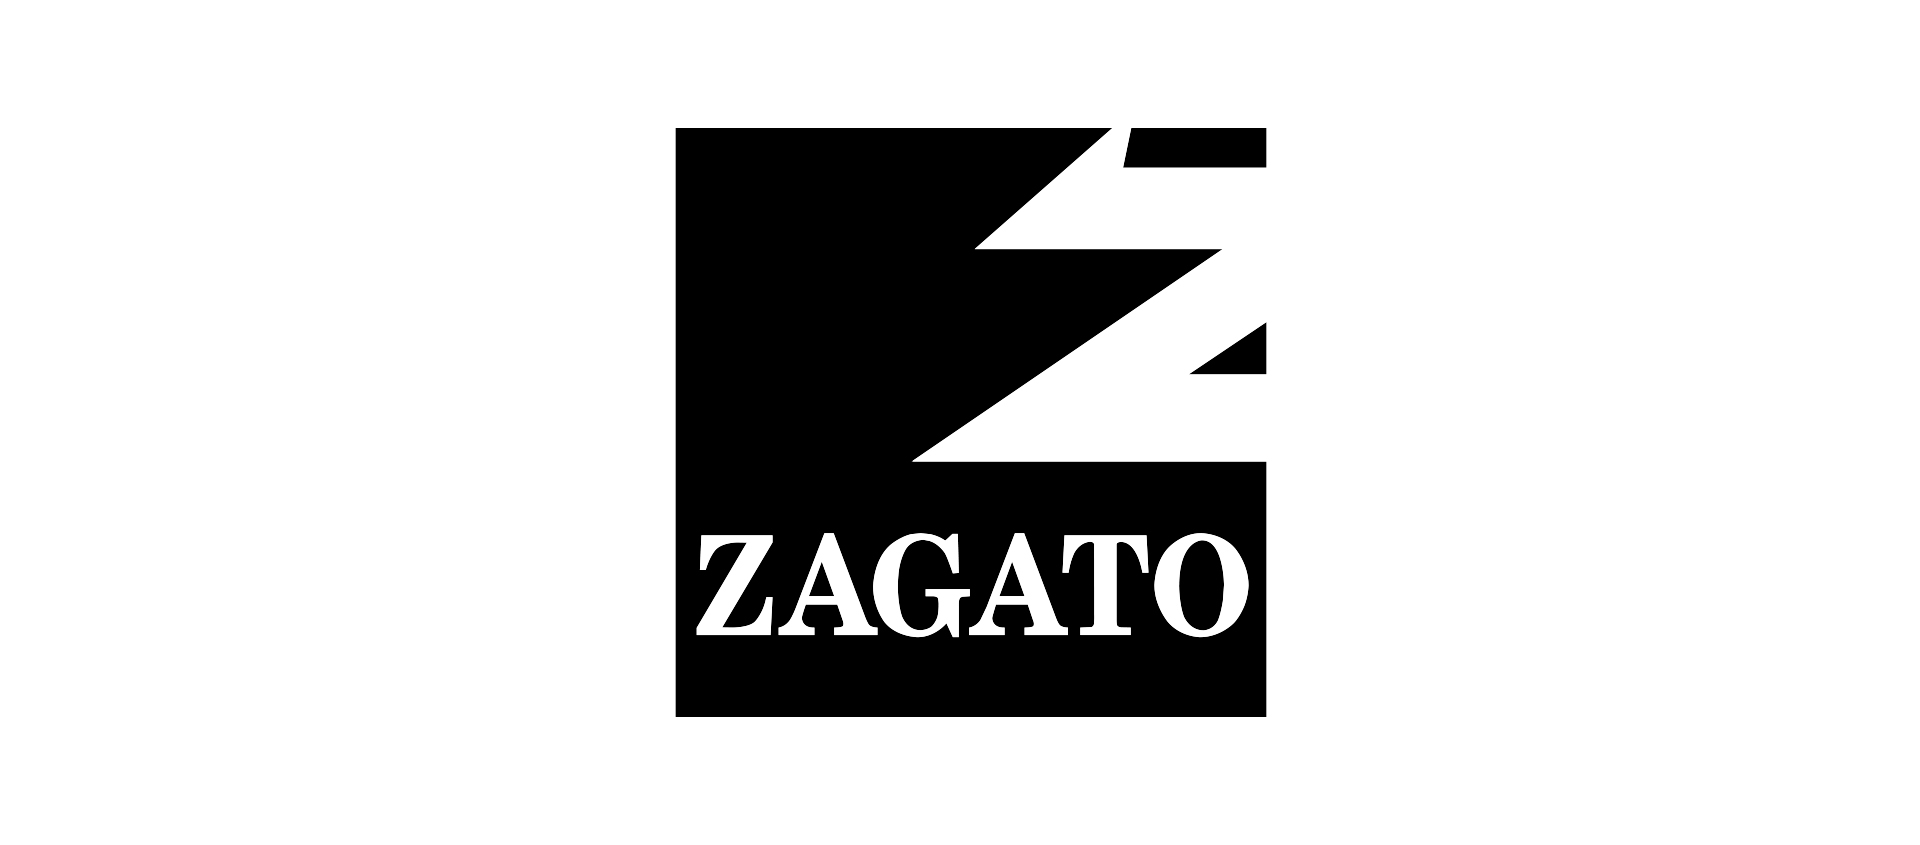 Zagato: rationality and lightness